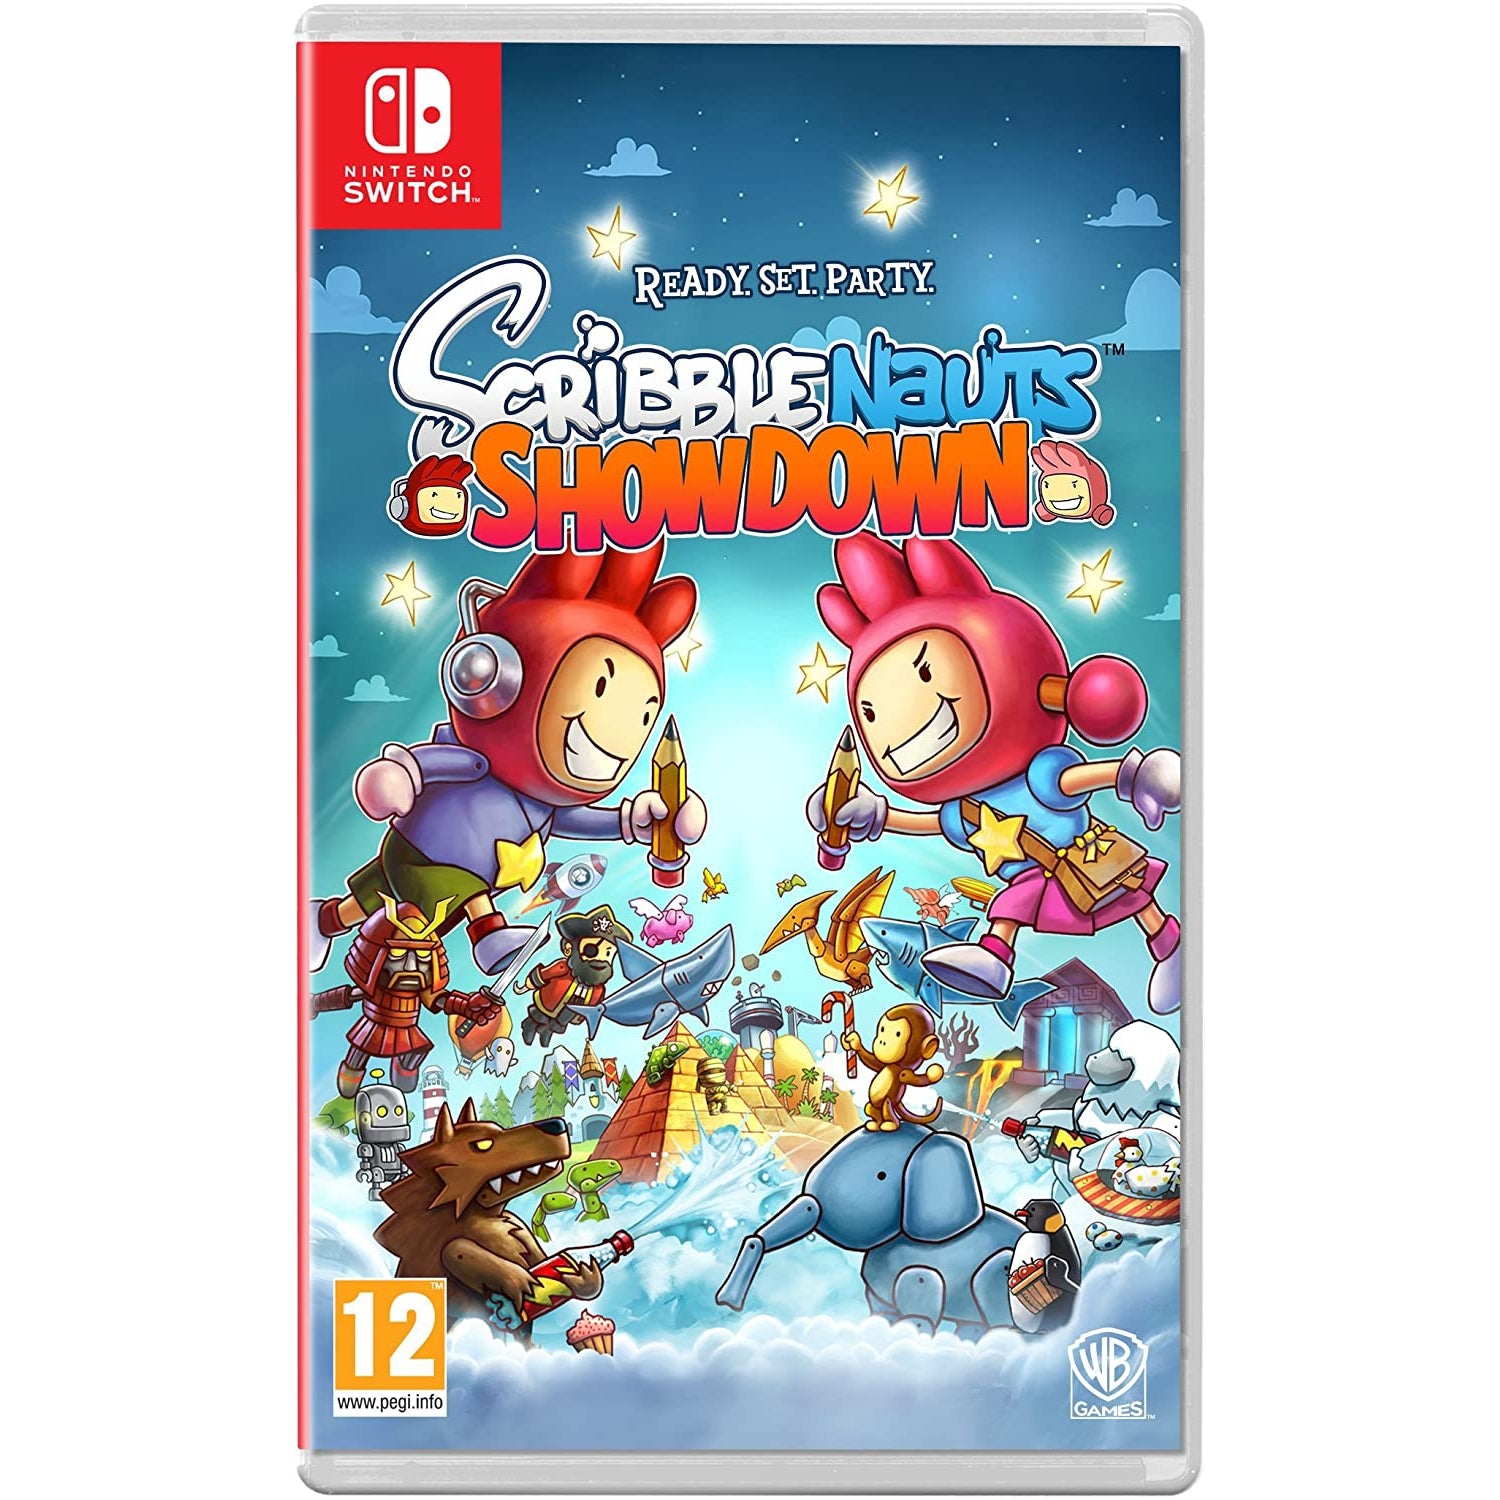 Scribblenauts Showdown - Nintendo Switch (DIGITAL)